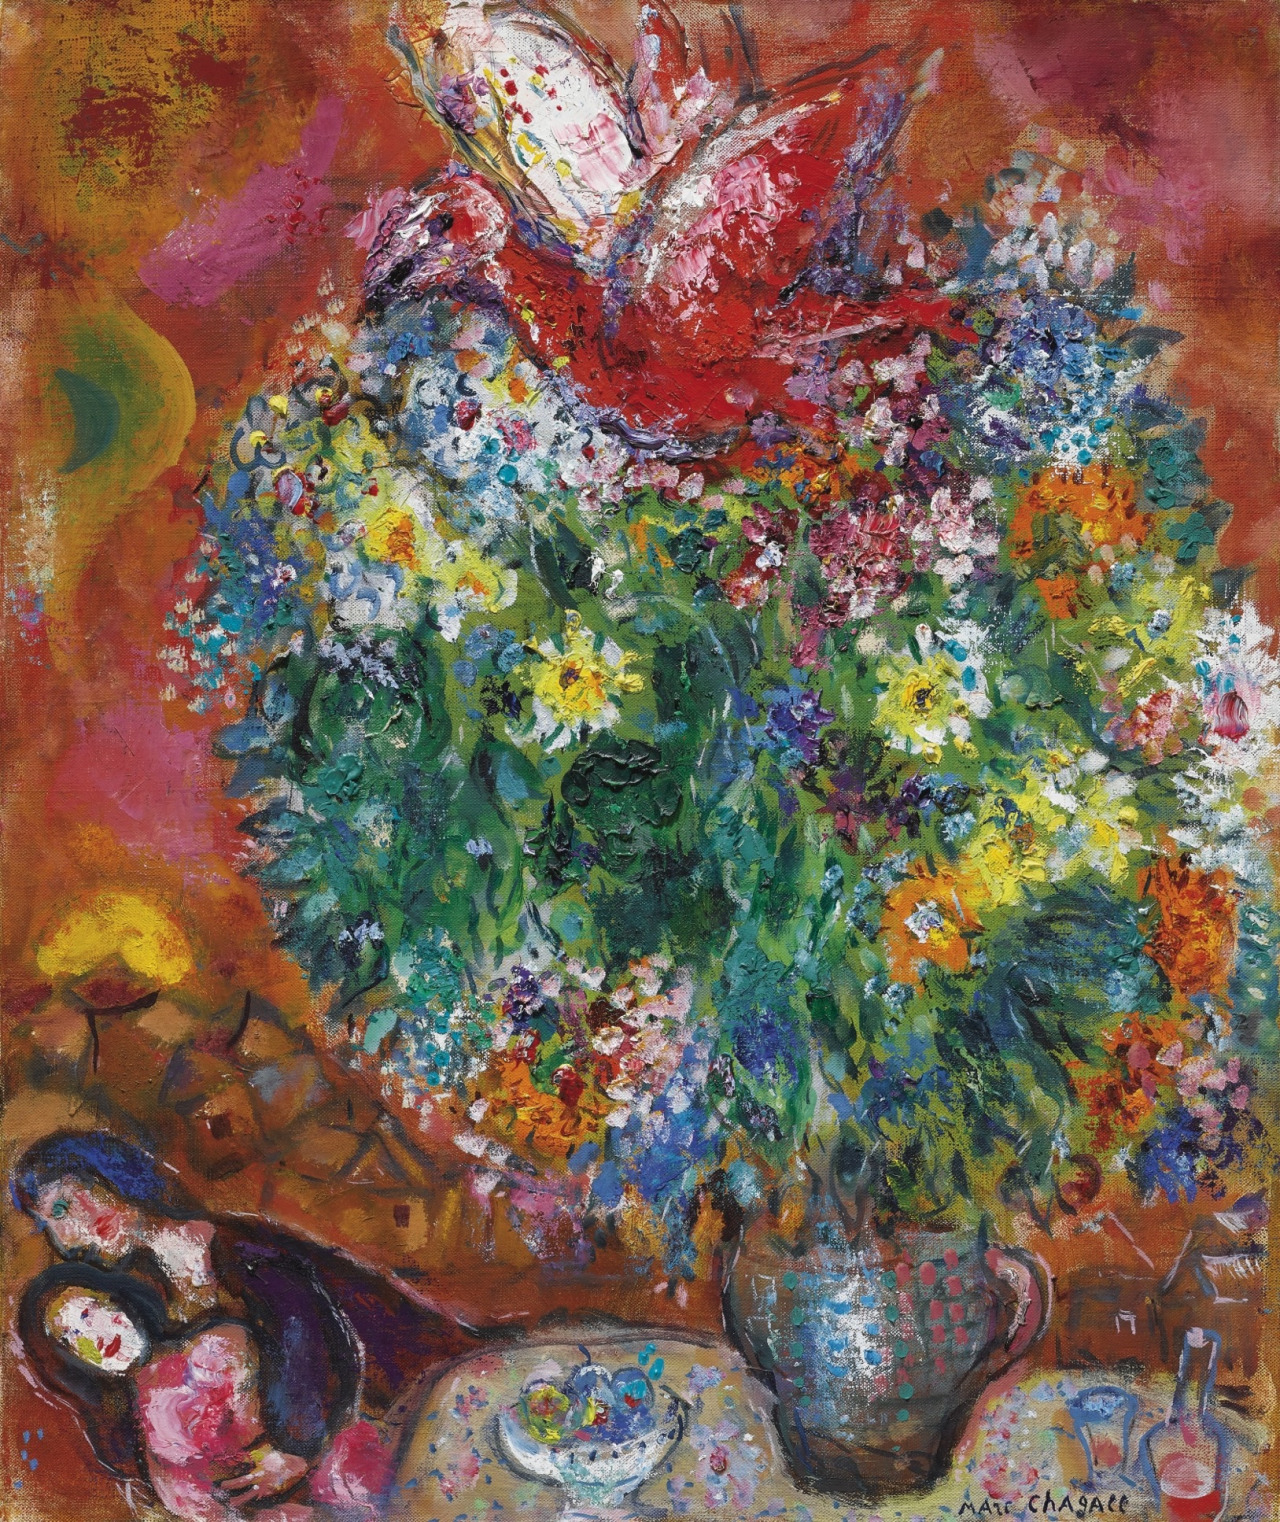 Marc+Chagall-1887-1985 (360).jpg